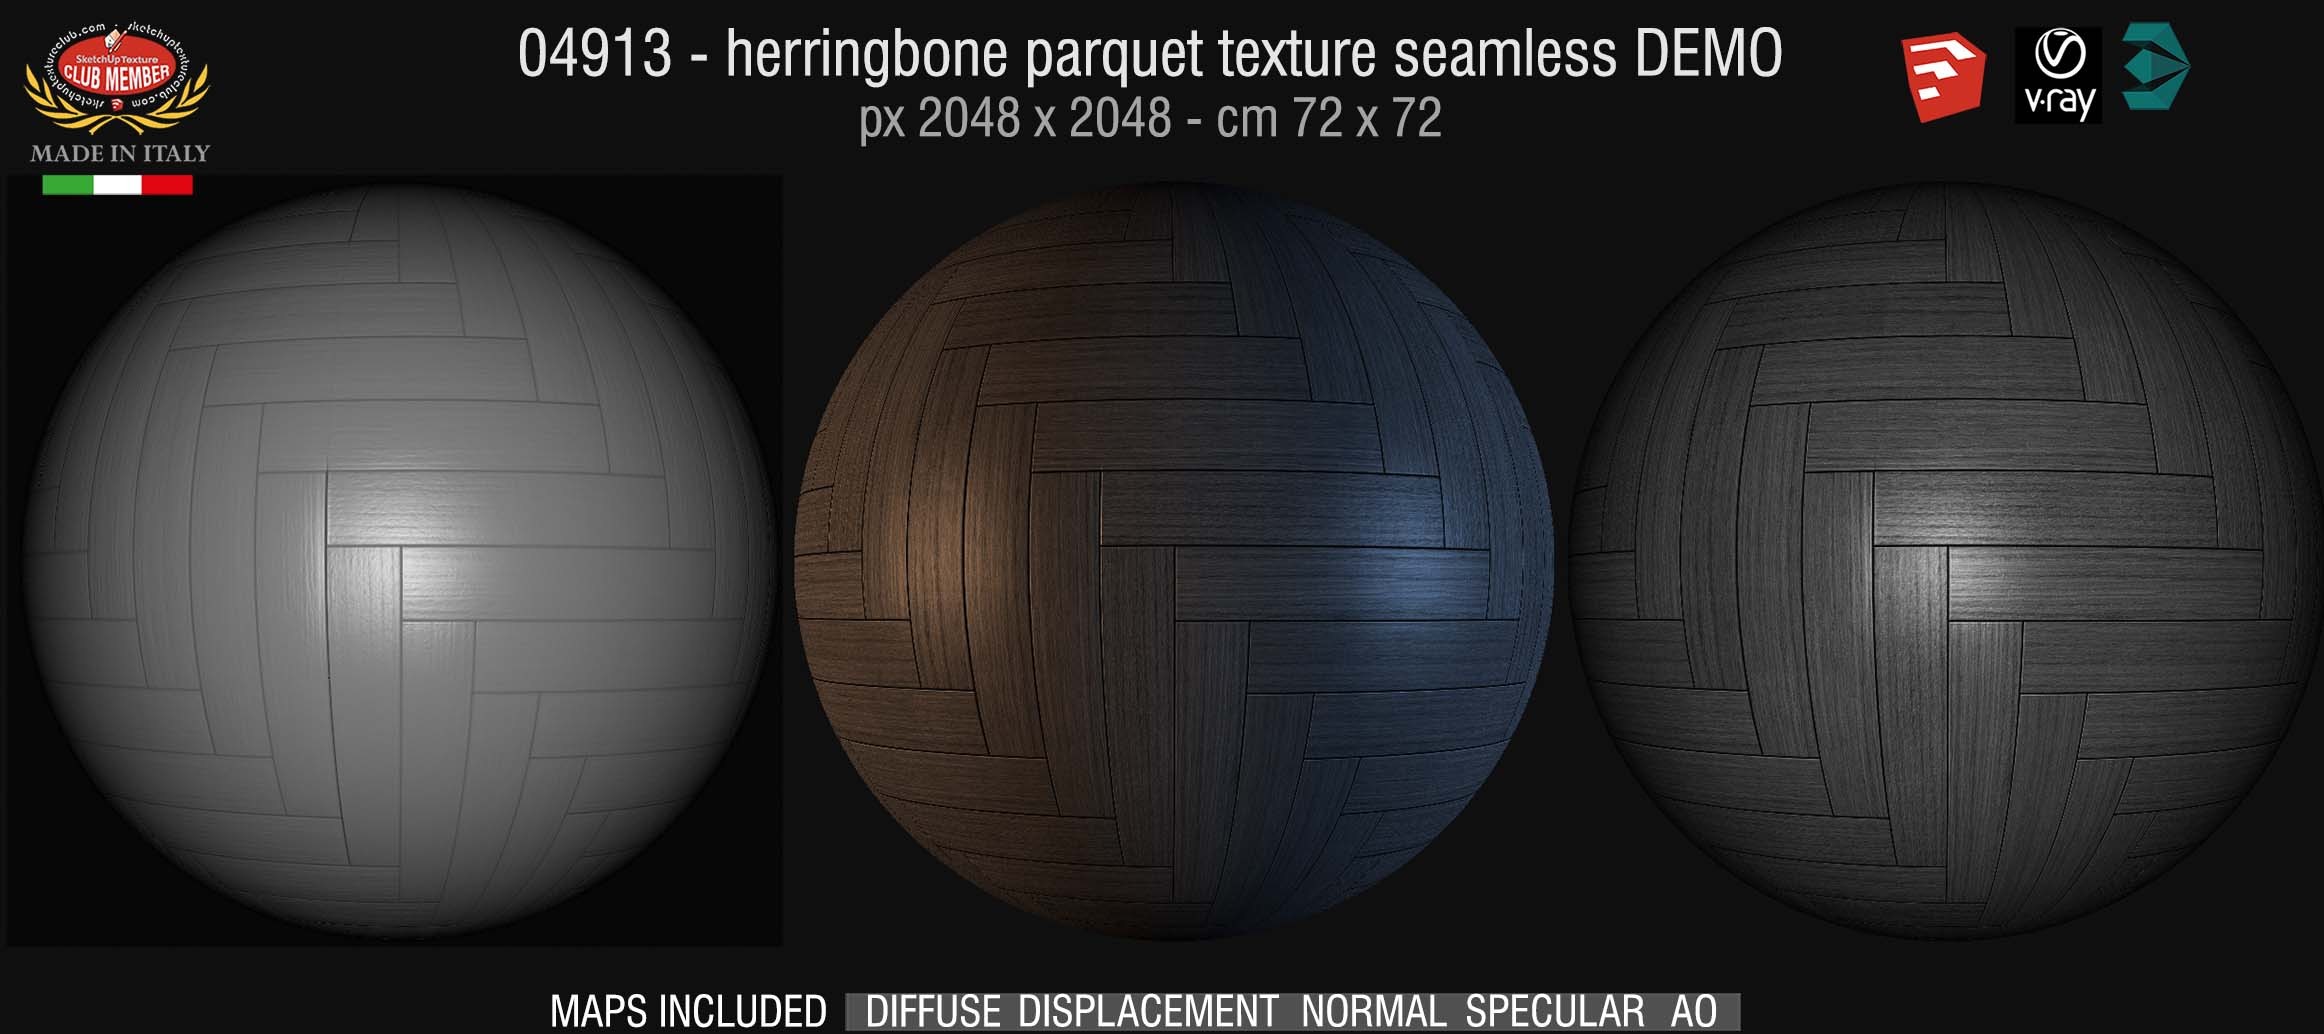 04913 HR Herringbone parquet texture seamless + maps DEMO